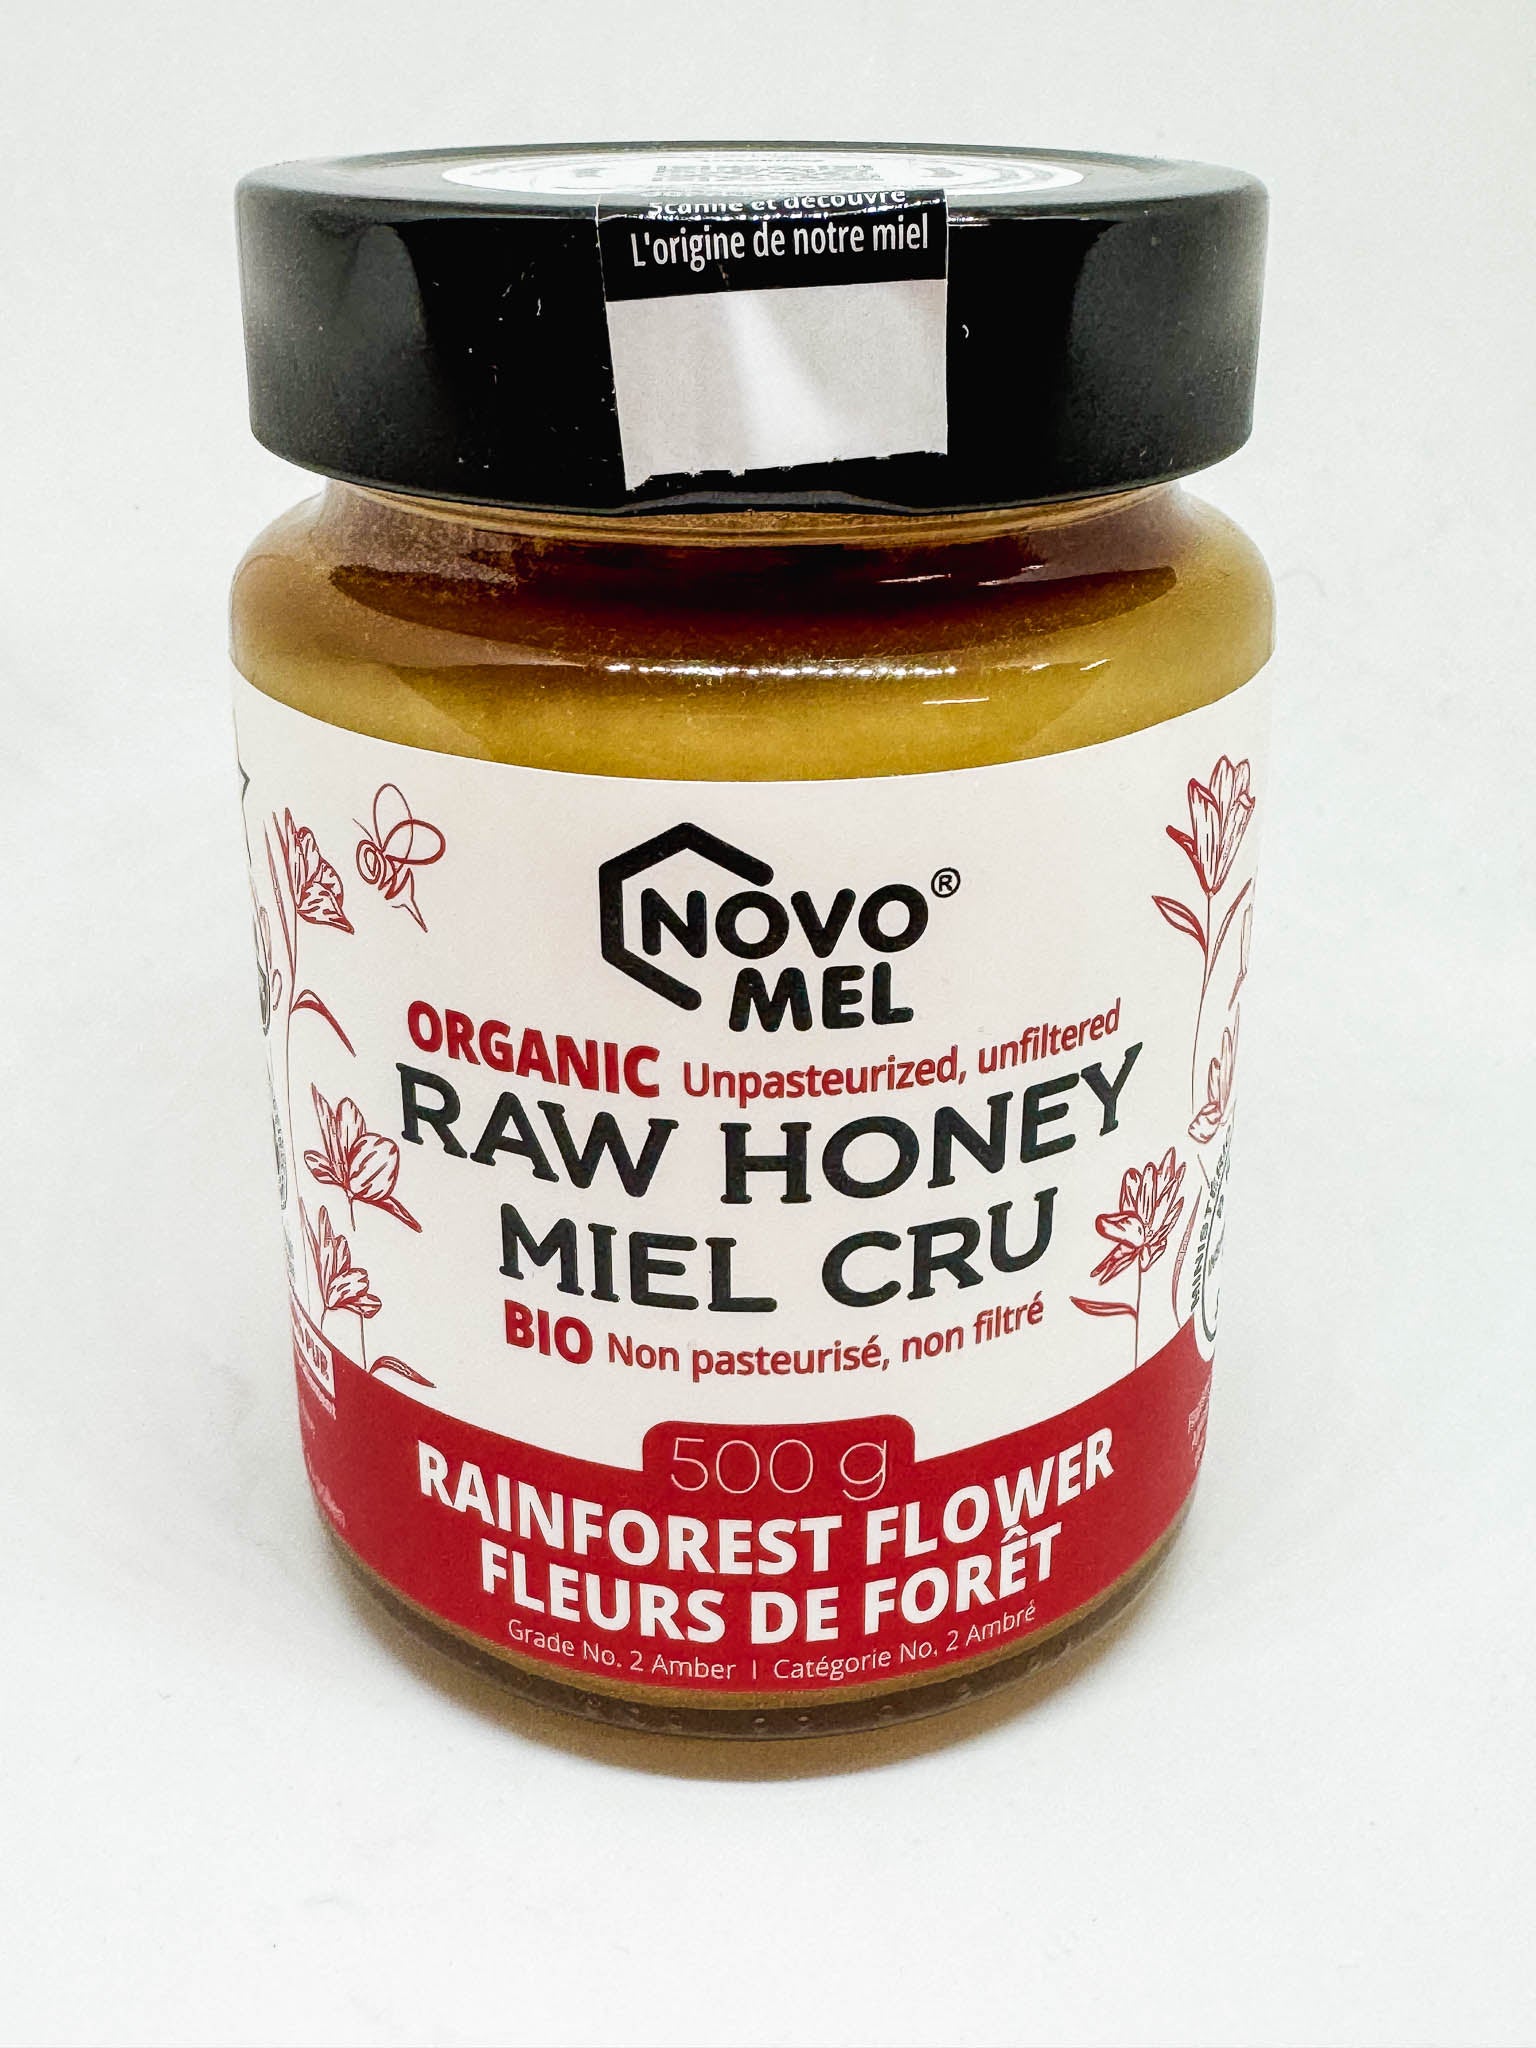 A jar of Novo Mel's organic raw rainforest flower honey on a white background